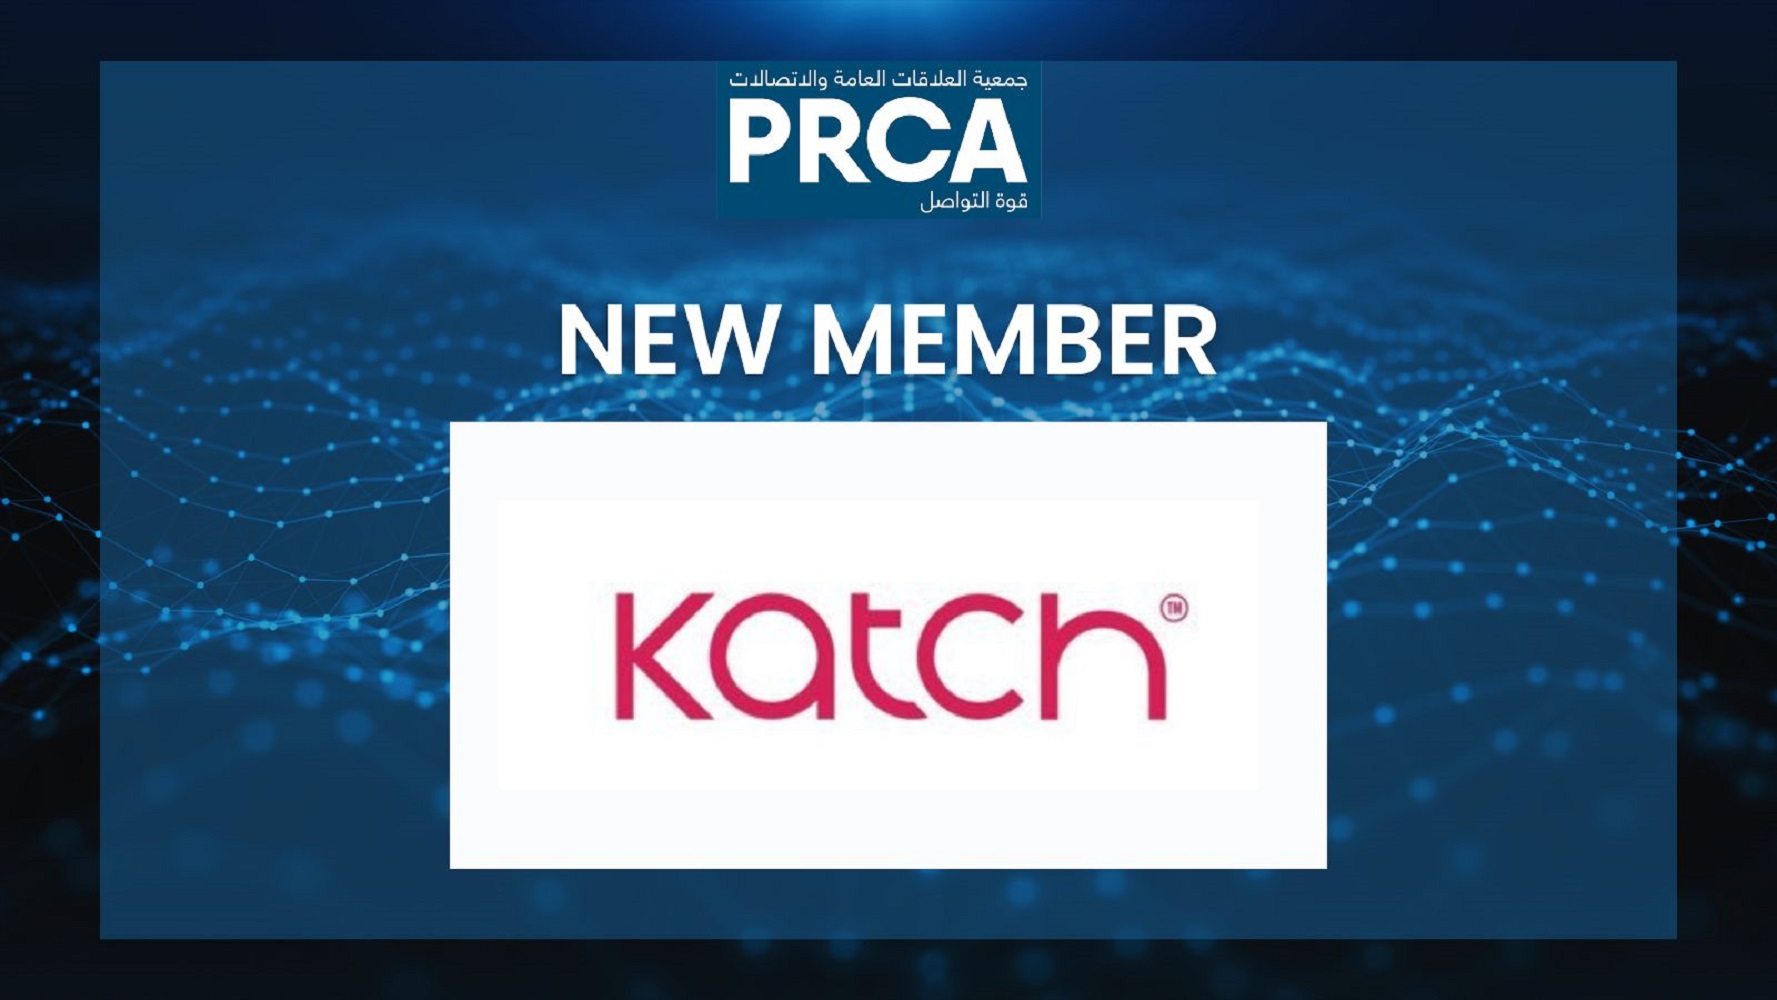 PRCA MENA Announces Katch International as New Member